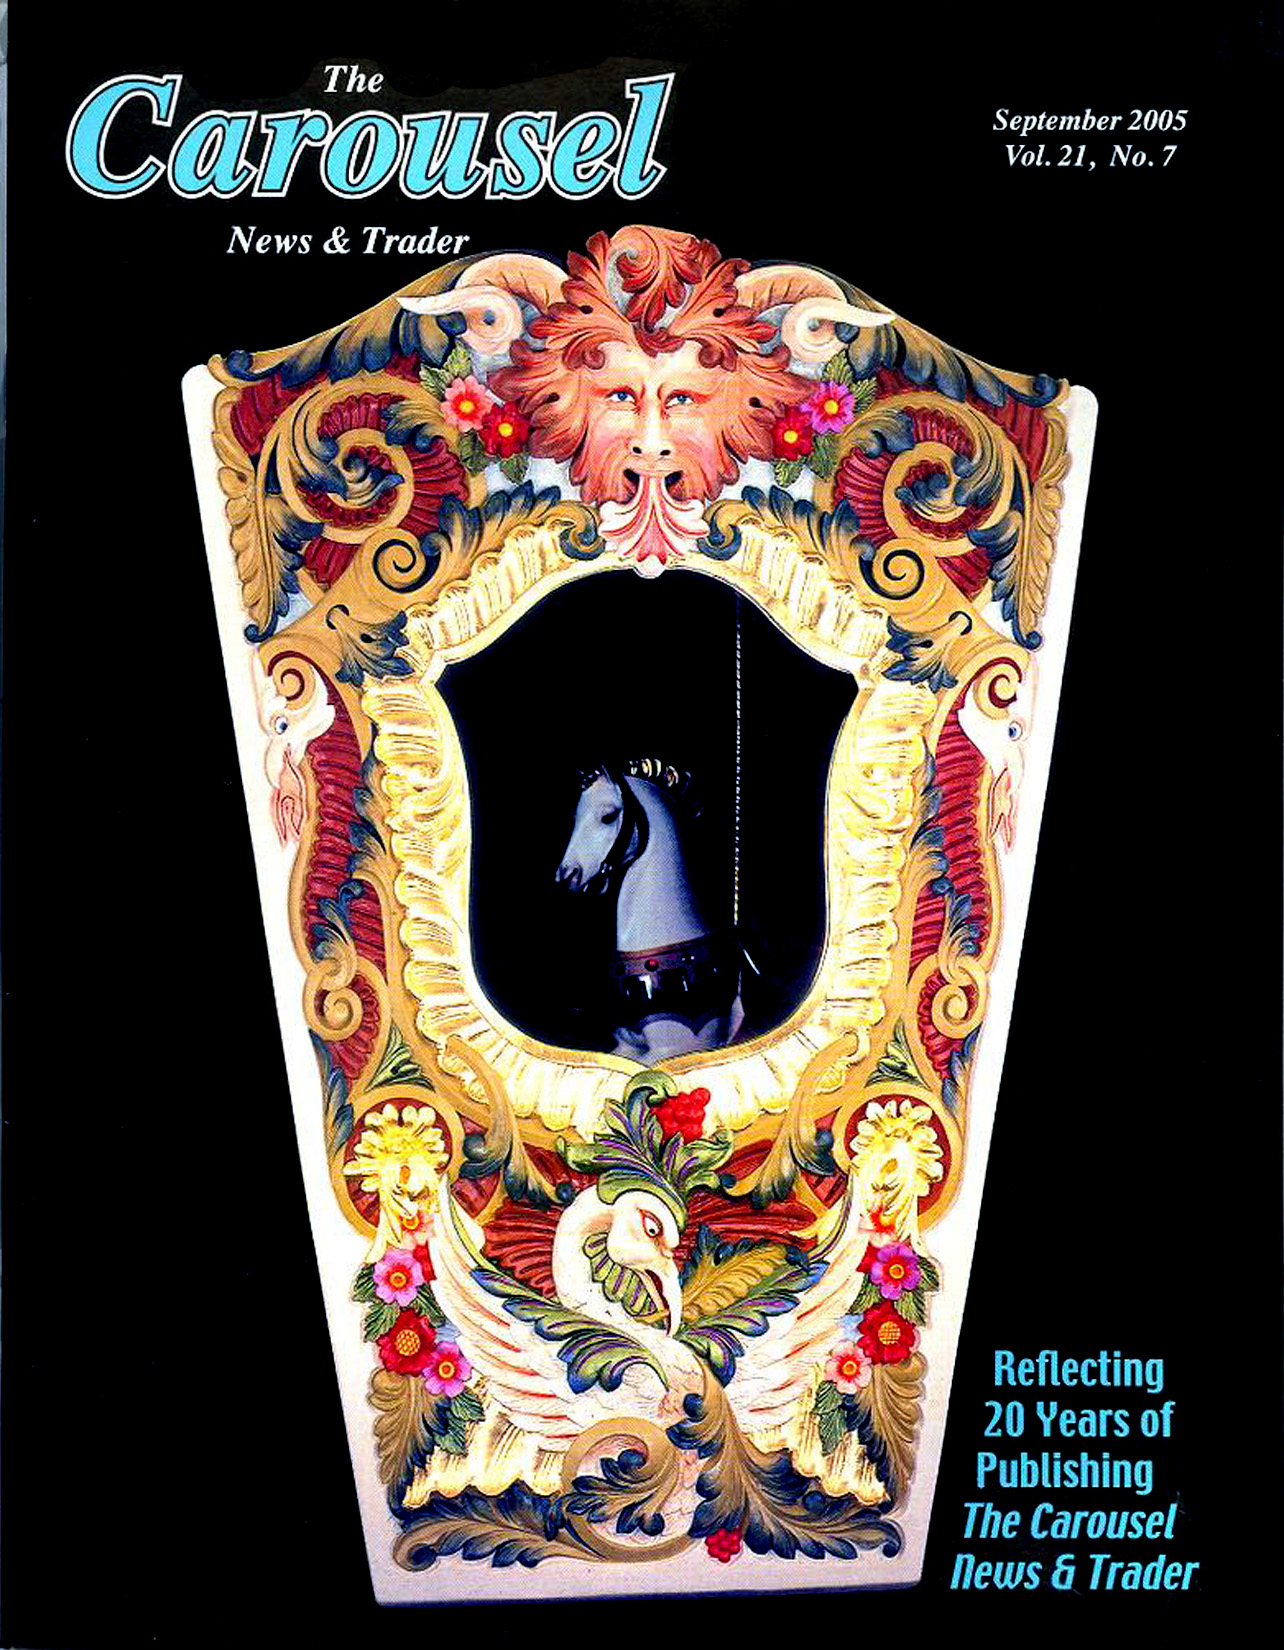 Carousel-news-cover-9_2005-Orton-Spooner-carousel-mirror-panel